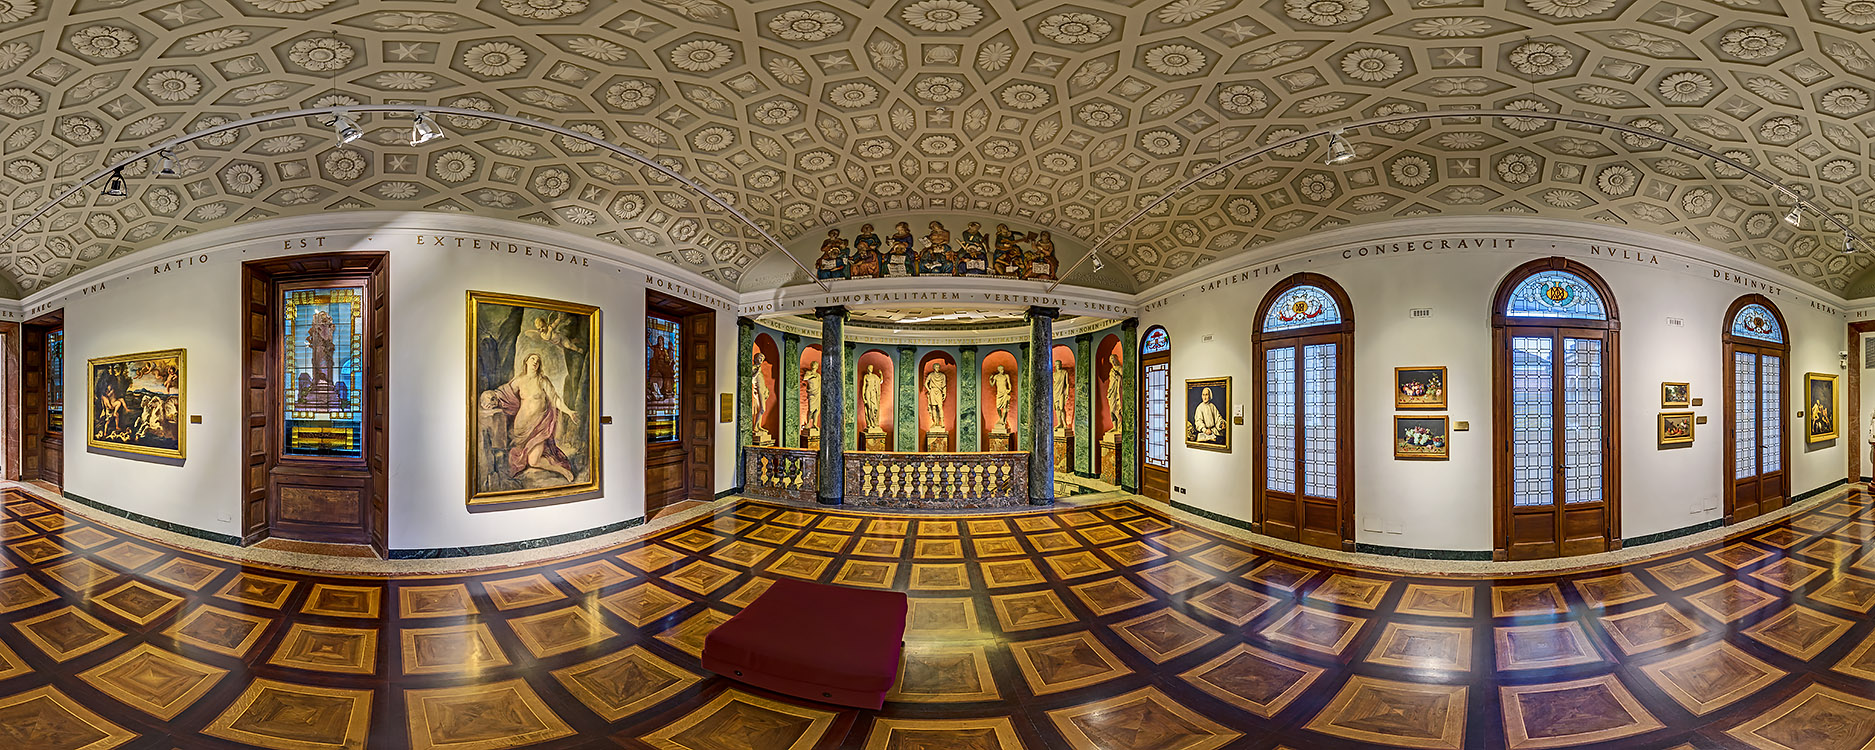 Nicolò da Bologna’s Hall hosting Italian and Flemish paintings of 17th Century